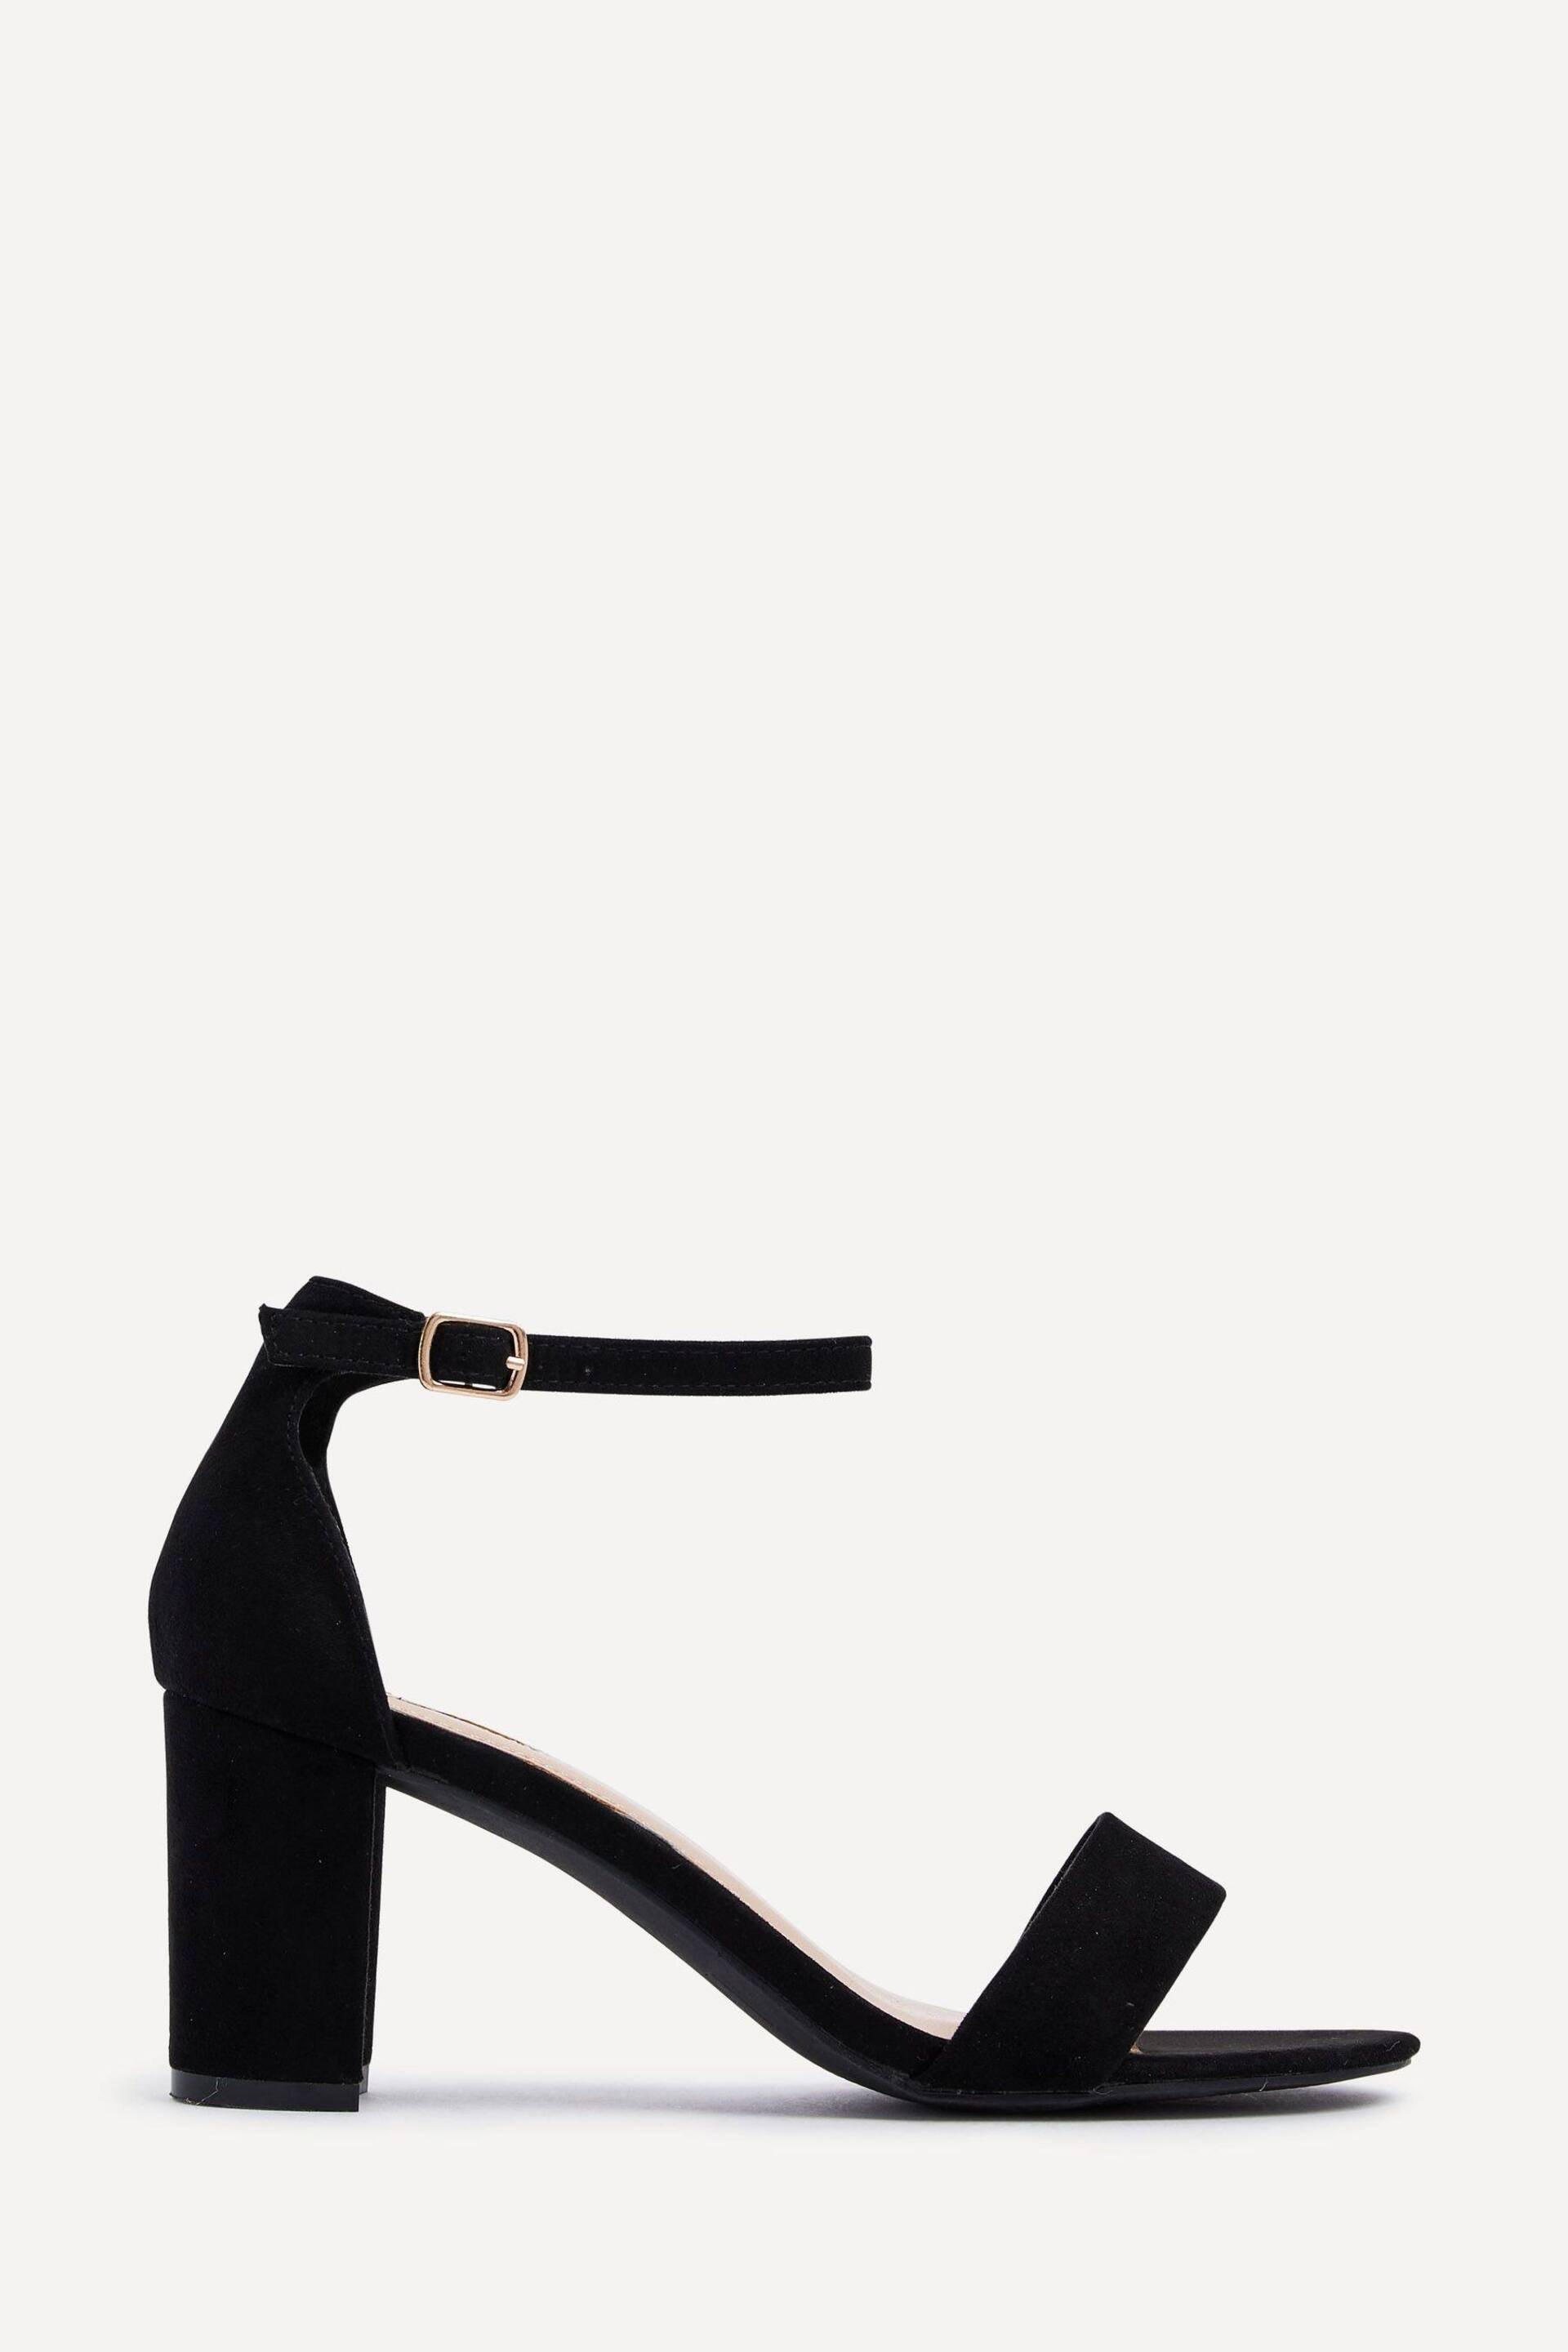 Linzi Black Franki Soft PU Open Toe Block Heels - Image 3 of 6